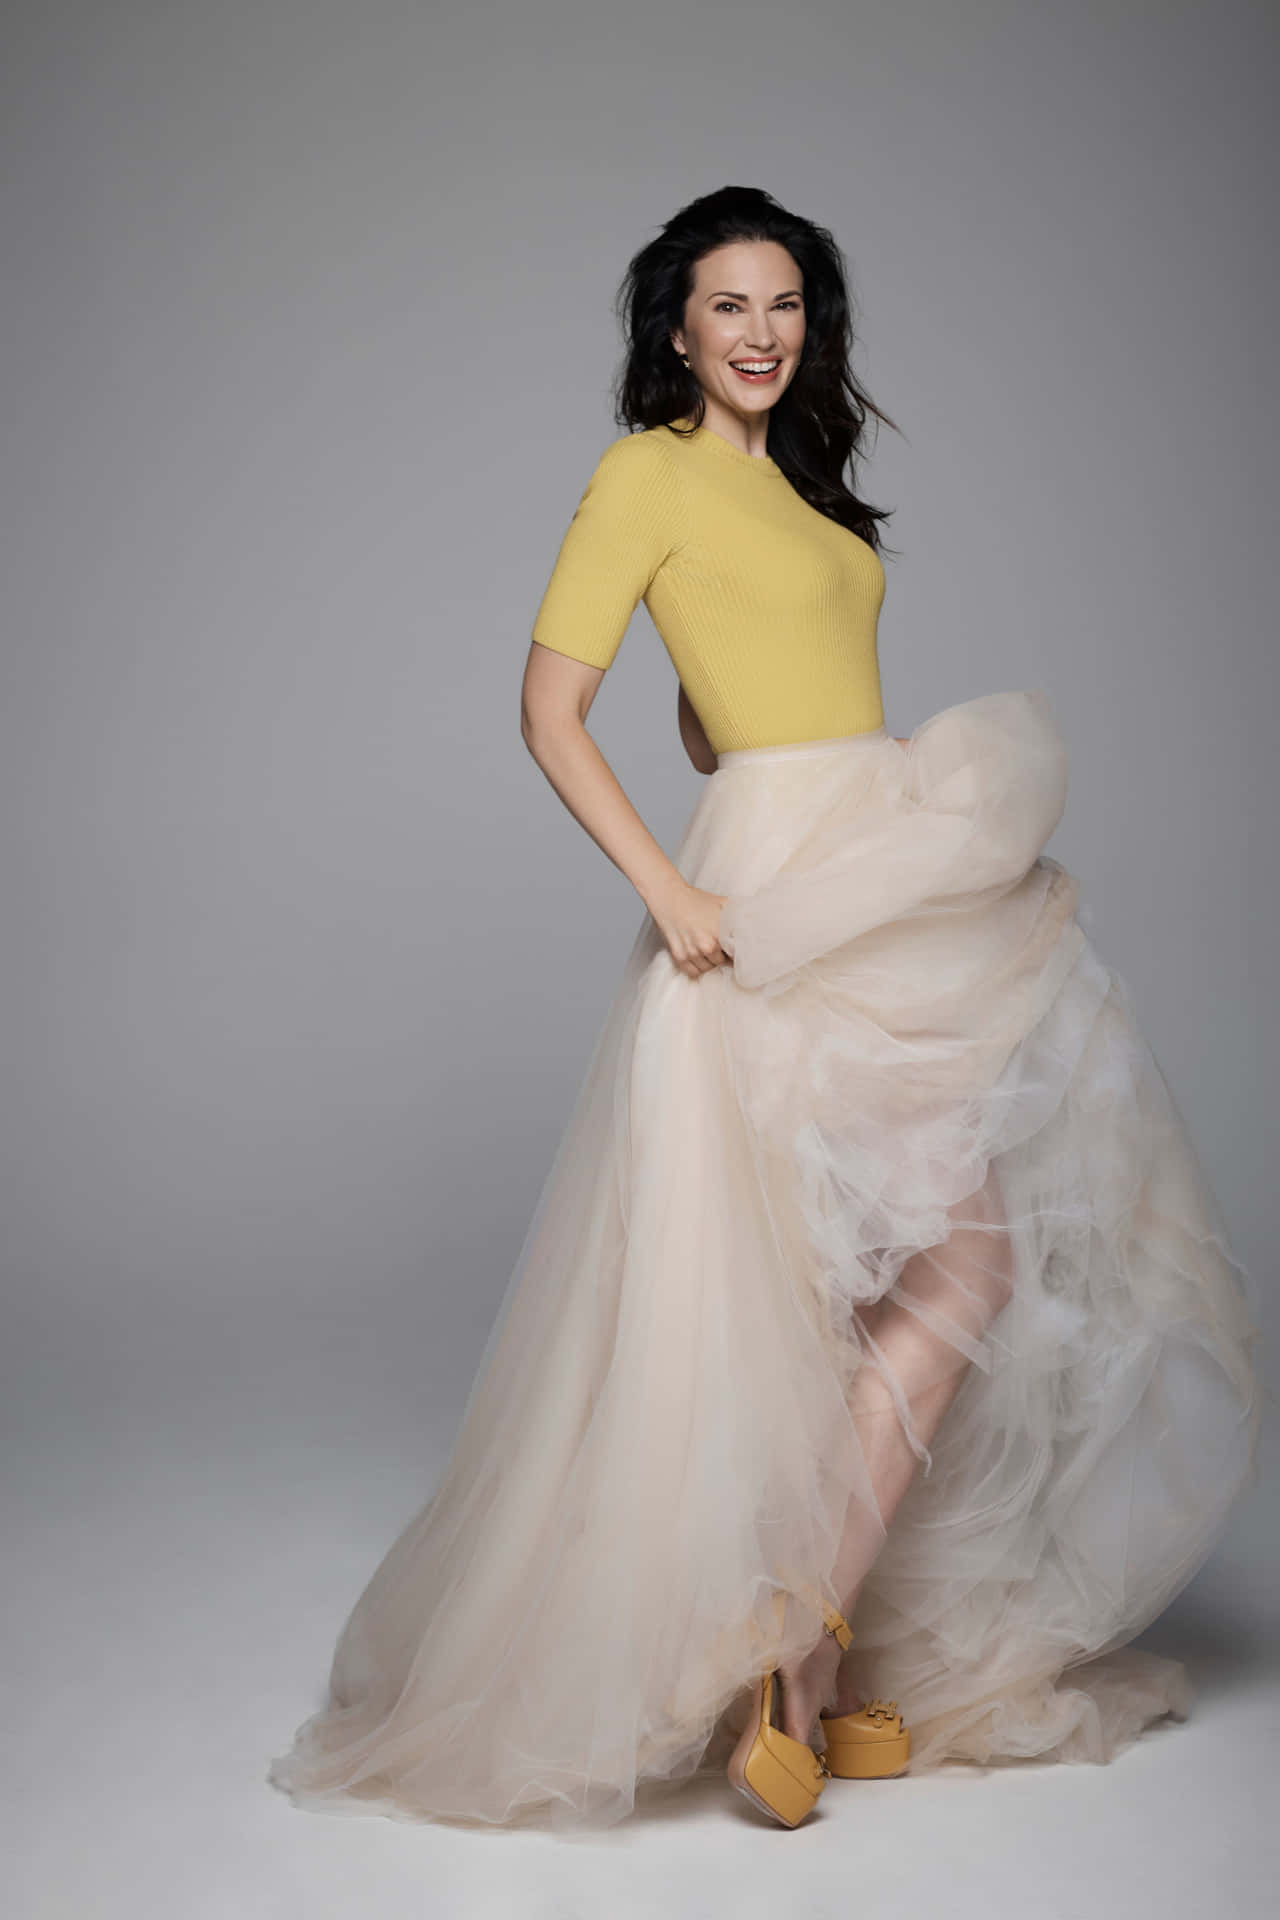 Elegant Womanin Yellow Topand Flowing Skirt Wallpaper